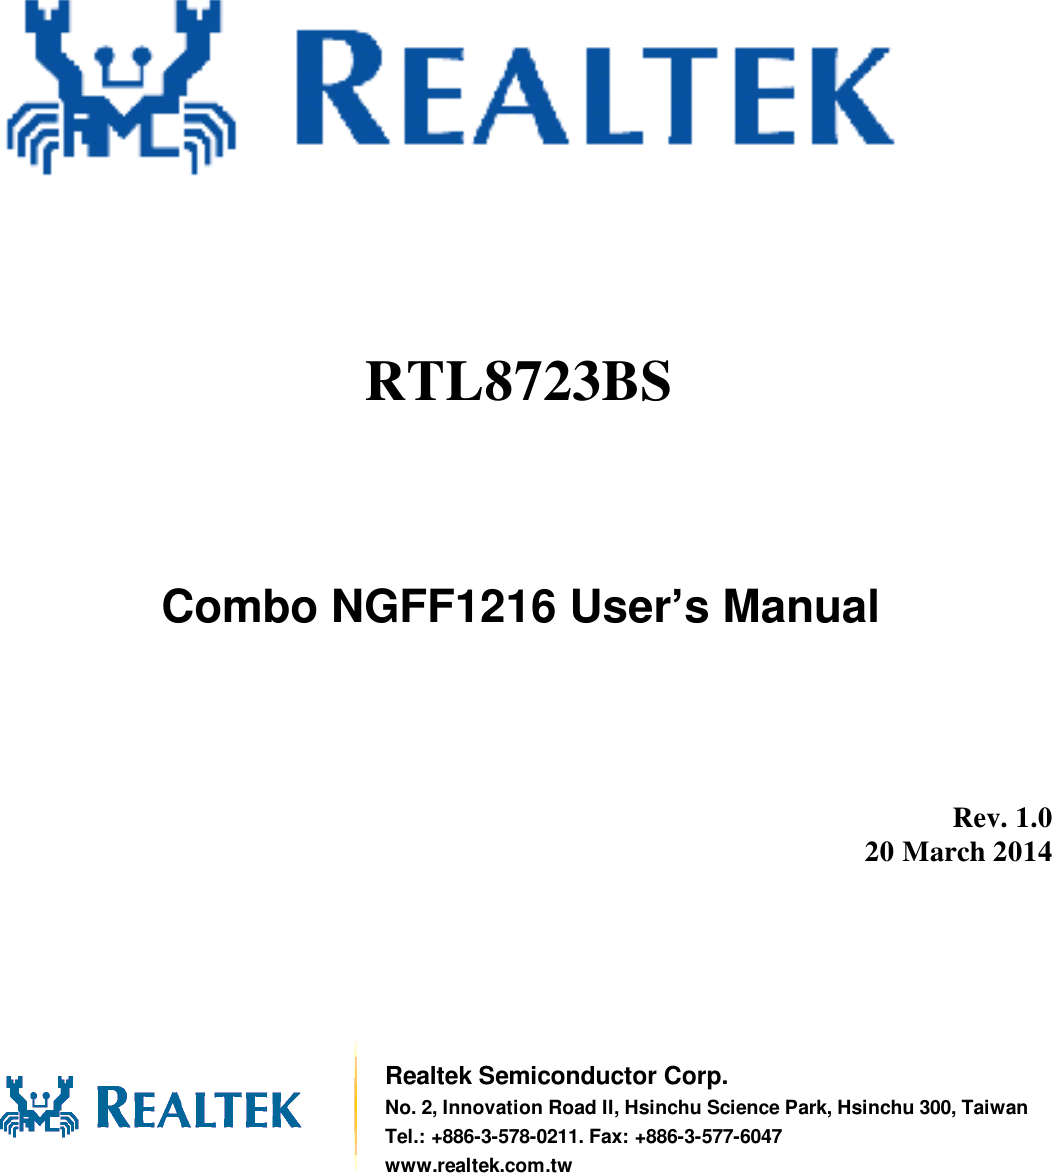                Combo NGFF1216 User’s Manual          Rev. 1.0 20 March 2014        Realtek Semiconductor Corp. No. 2, Innovation Road II, Hsinchu Science Park, Hsinchu 300, Taiwan Tel.: +886-3-578-0211. Fax: +886-3-577-6047 www.realtek.com.tw RTL8723BS  